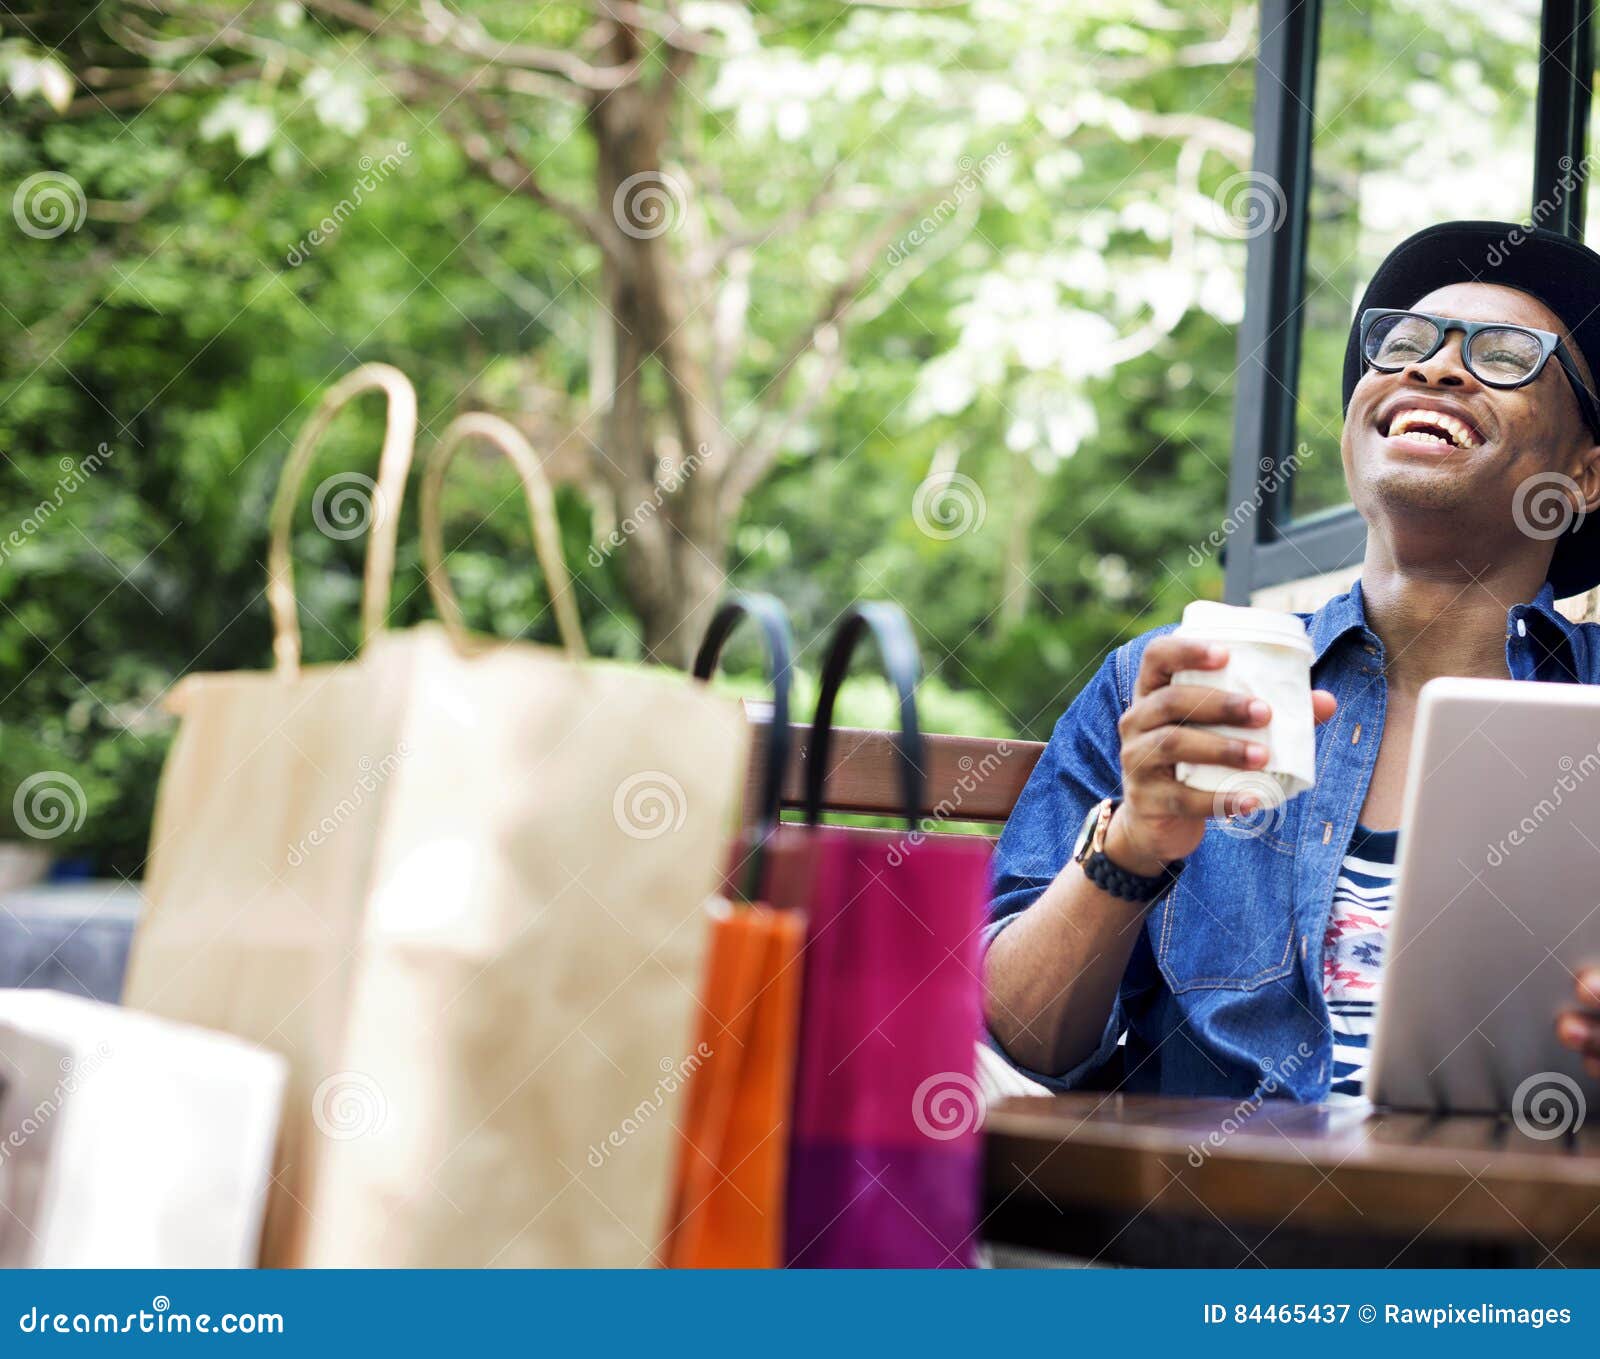 man shopping spending customer consumerism concept